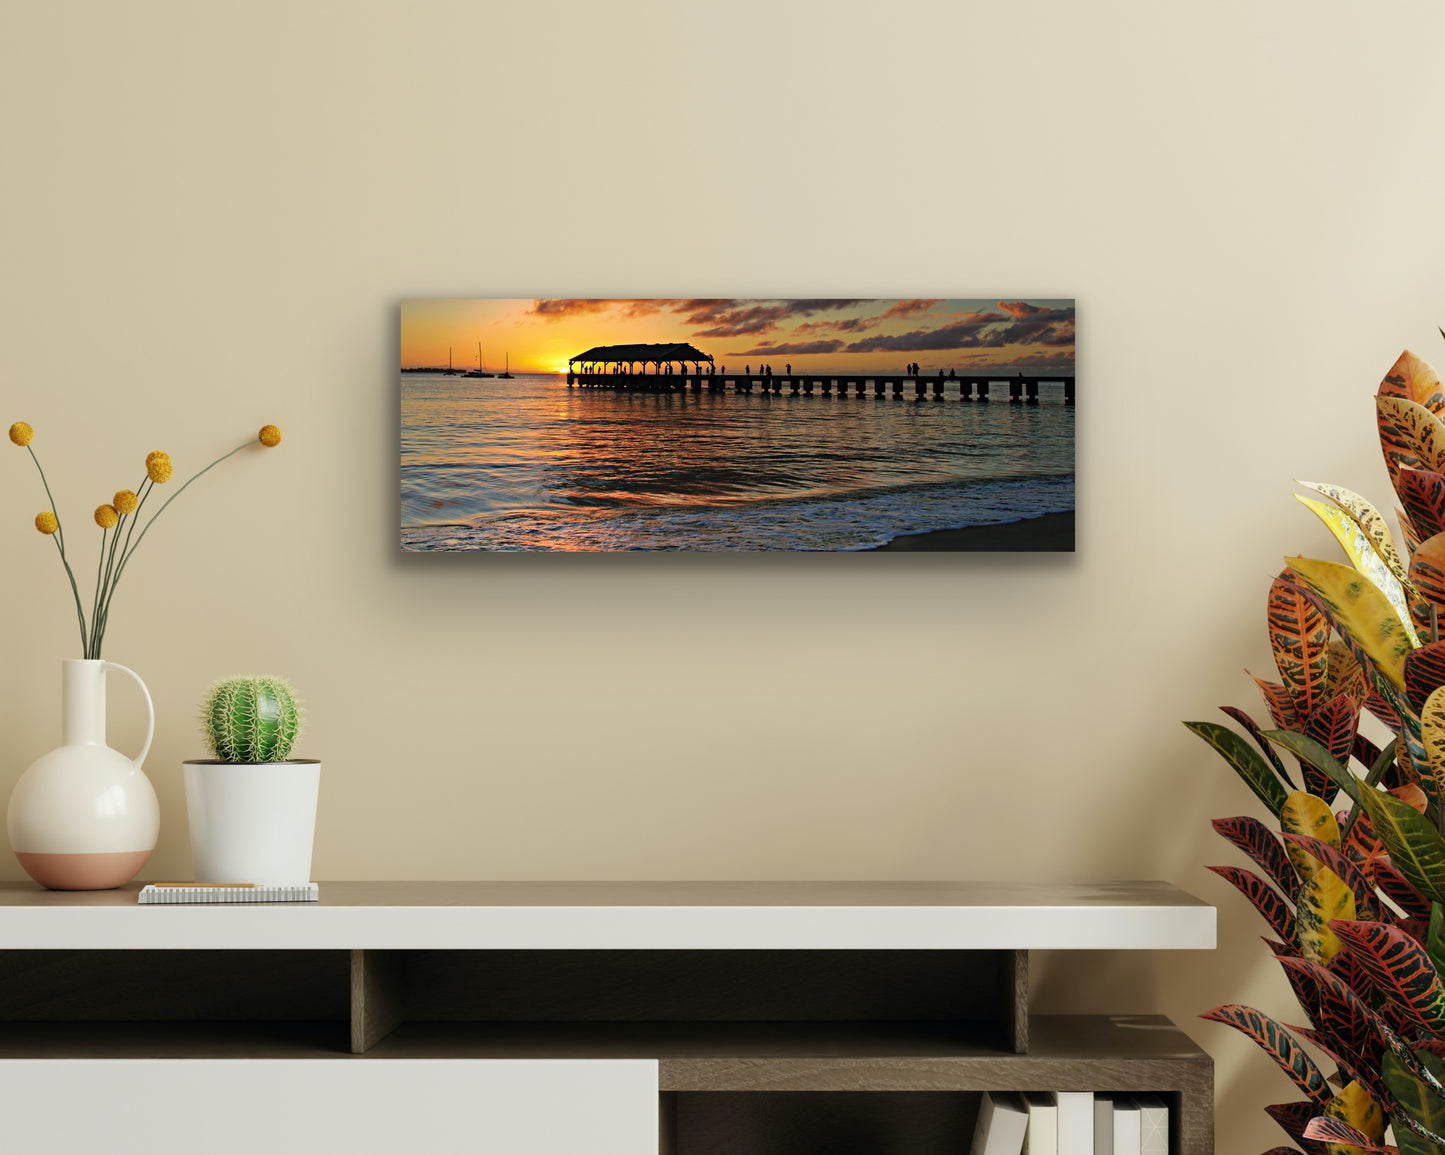 Wall demo of Hanalei Pier Sunset, a fine art landscape photograph by Inspiring Images Hawaii.